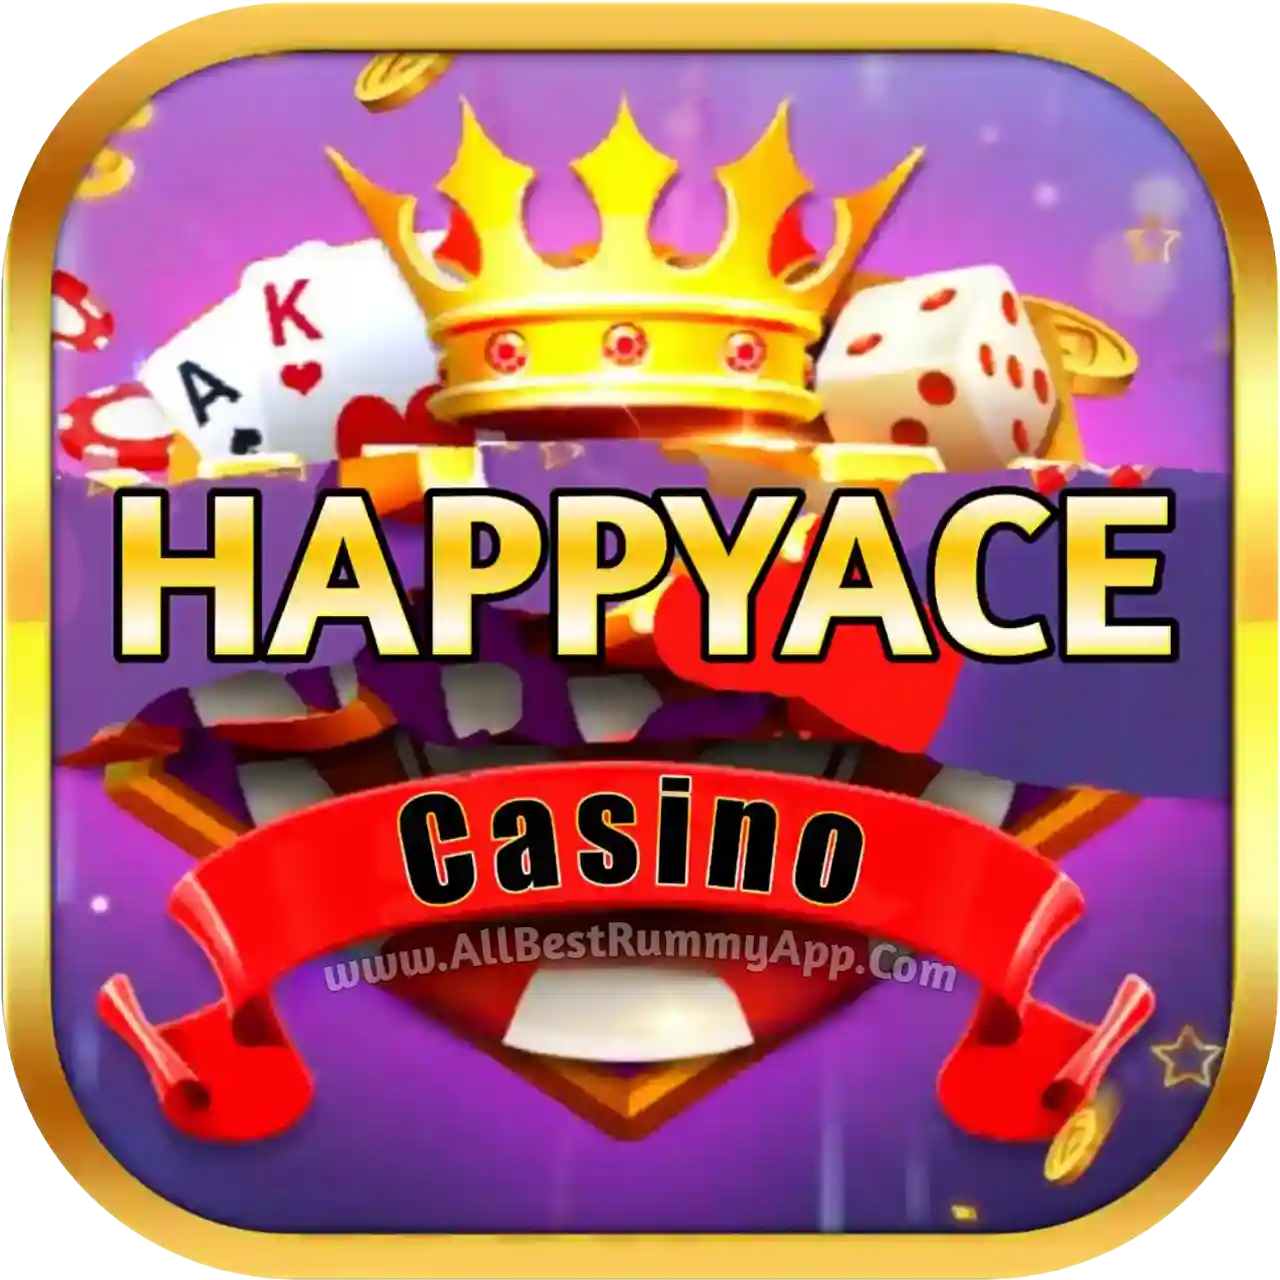 Happy Ace Casino Logo - India Rummy APk